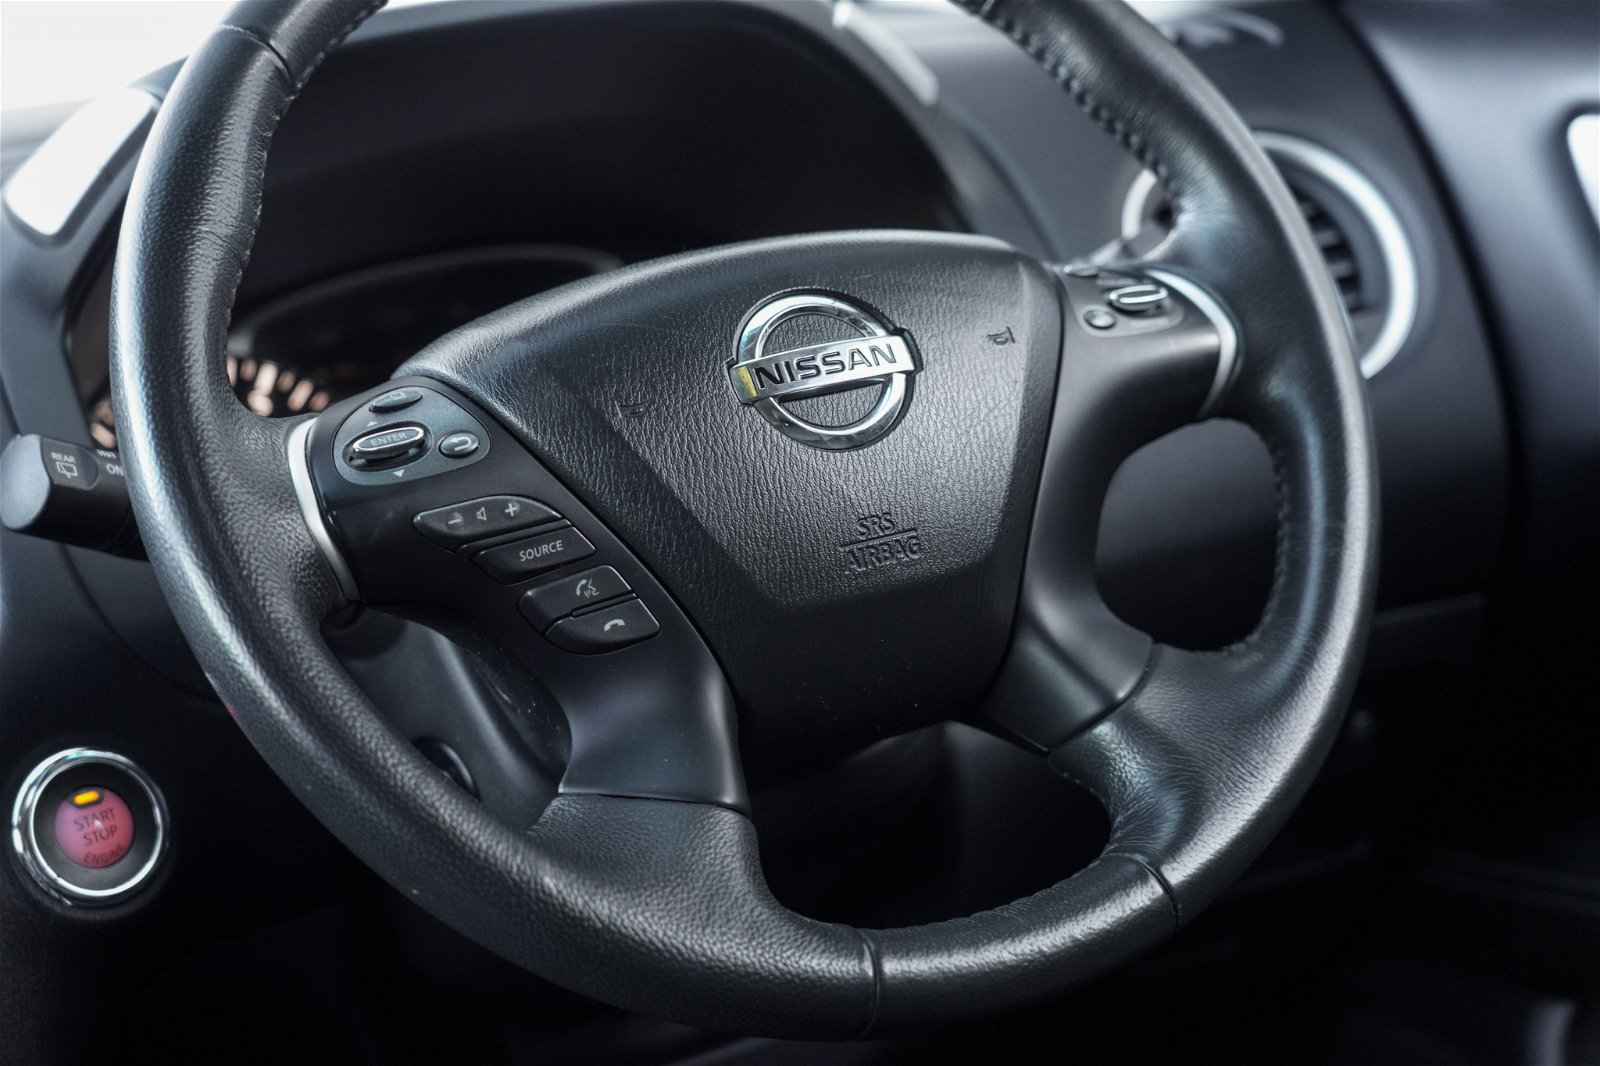 2015 Nissan Pathfinder TI 3.5P 4WD 6CVT